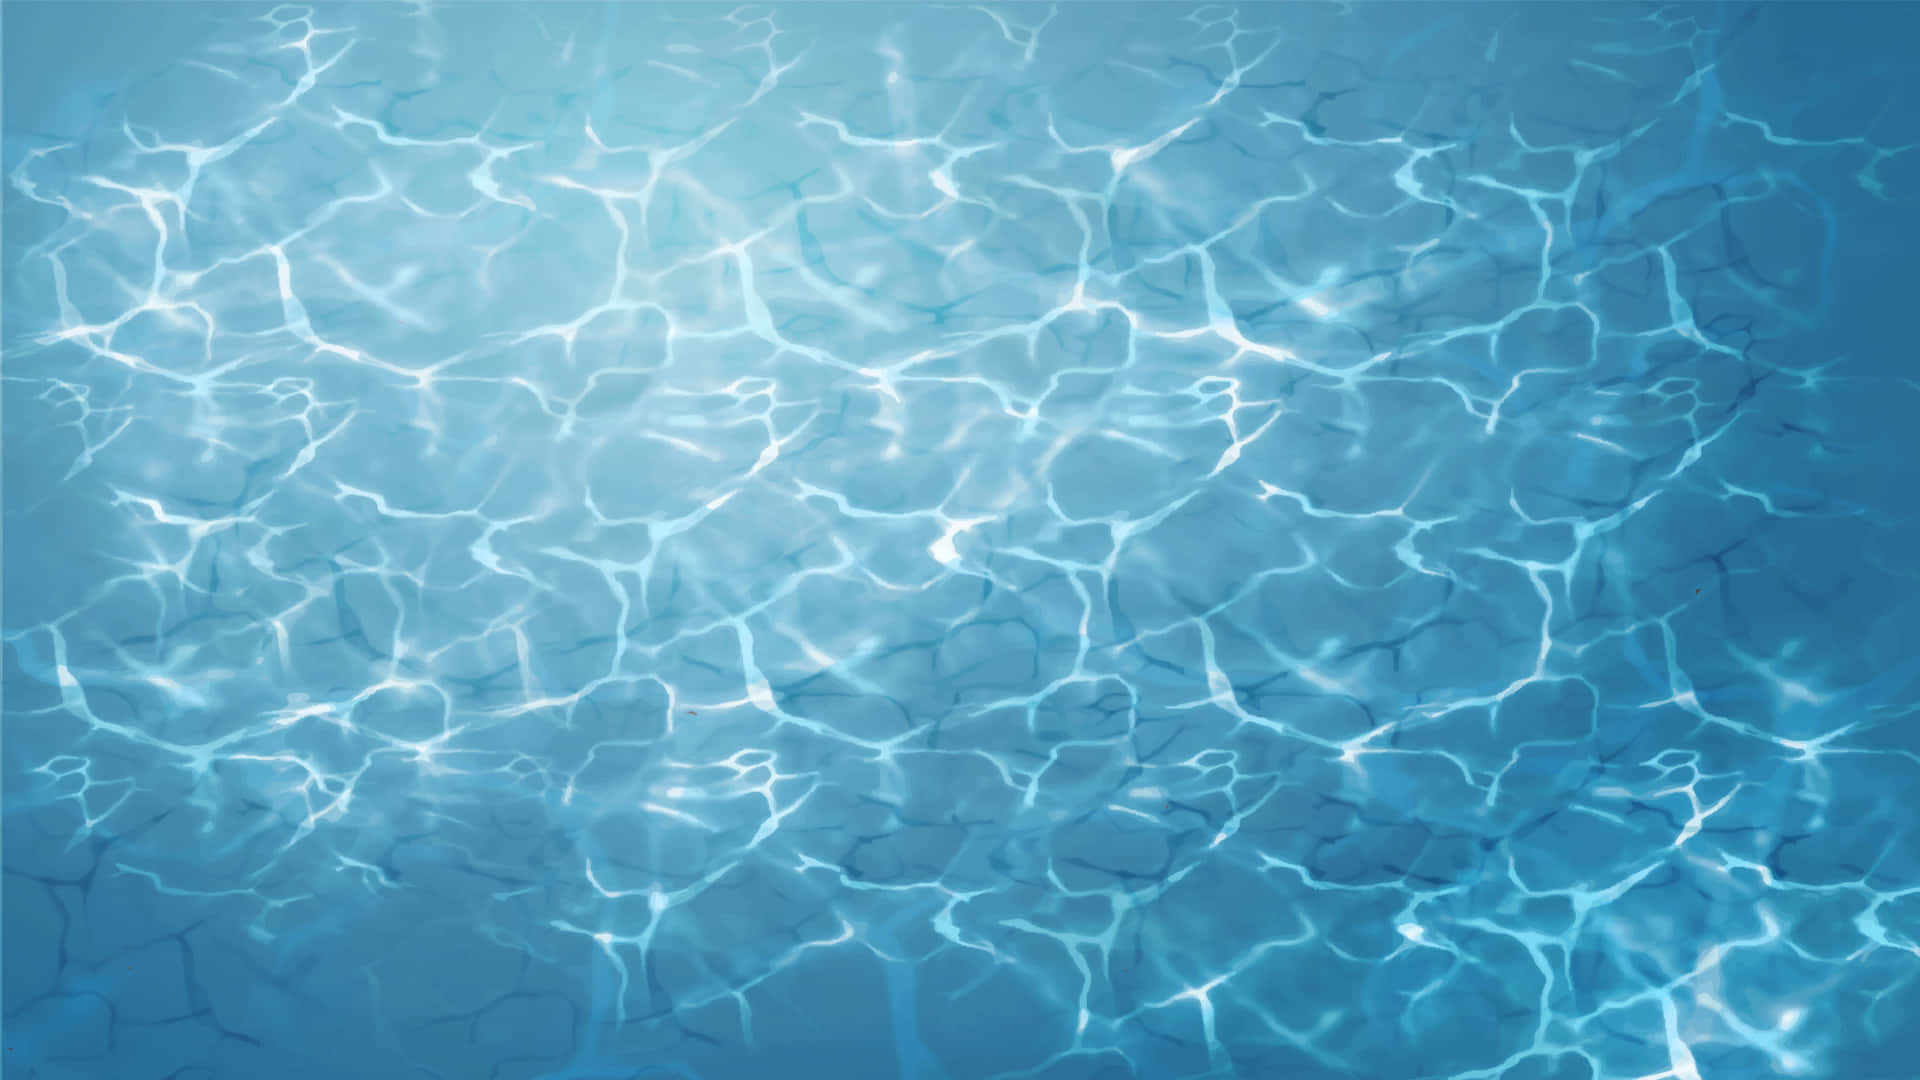 Swimming Pool Reflections iPhone Wallpaper  iDrop News